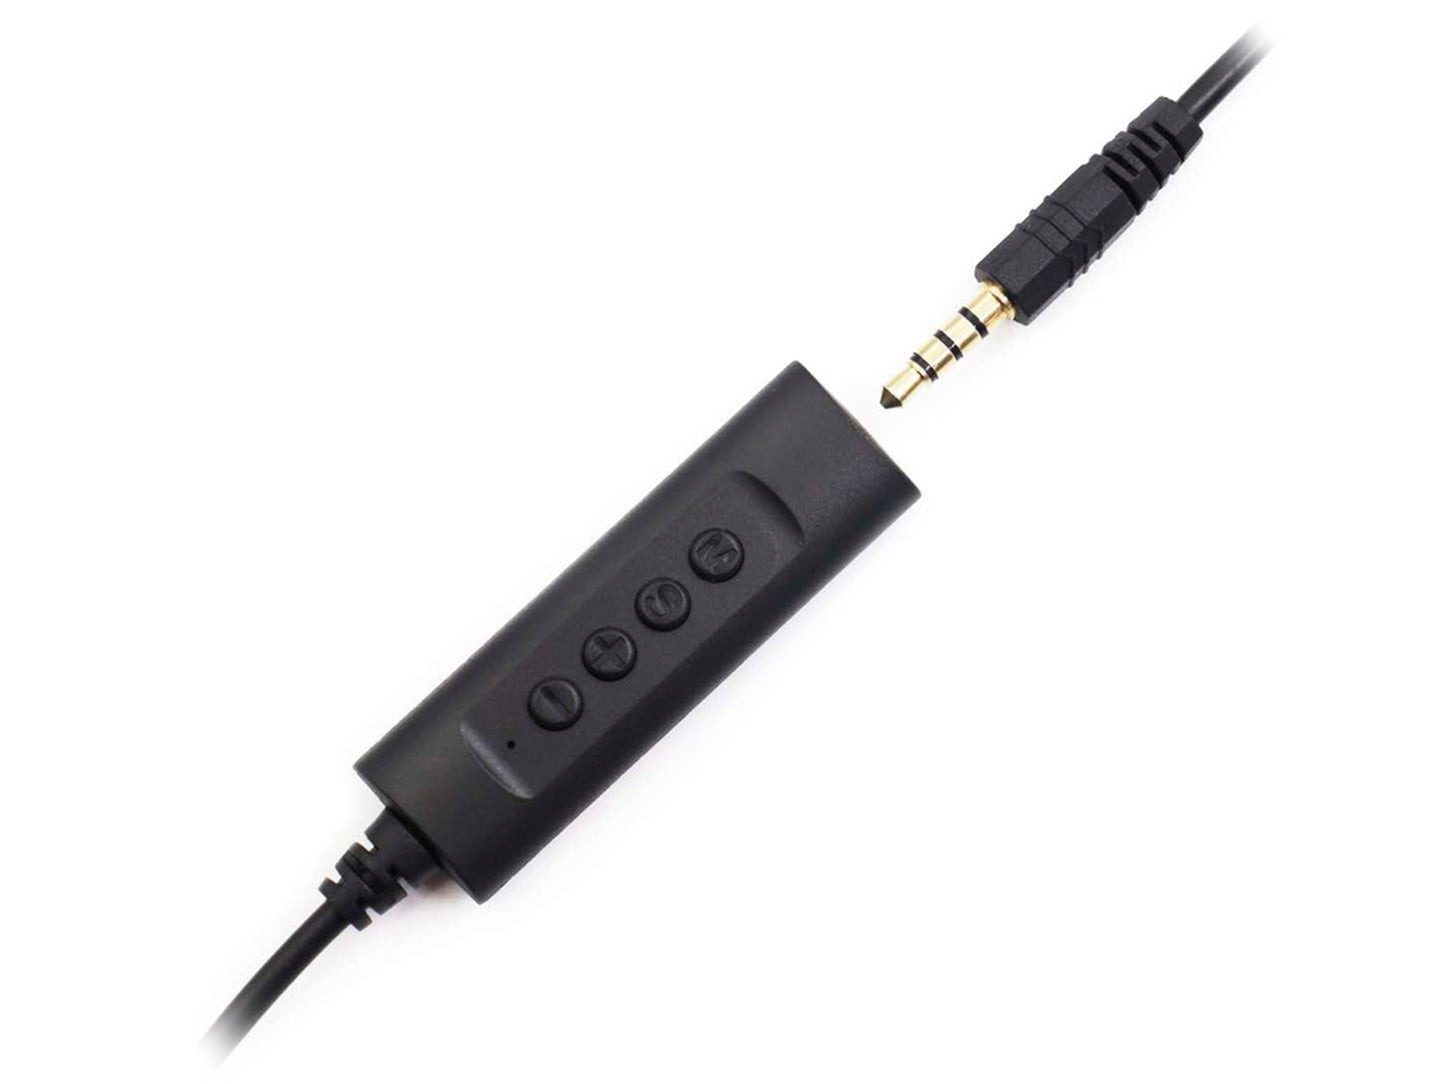 USB Headphone Controller Sandberg 134-17 - 1.5m Cable, MiniJack and USB-A Connectors